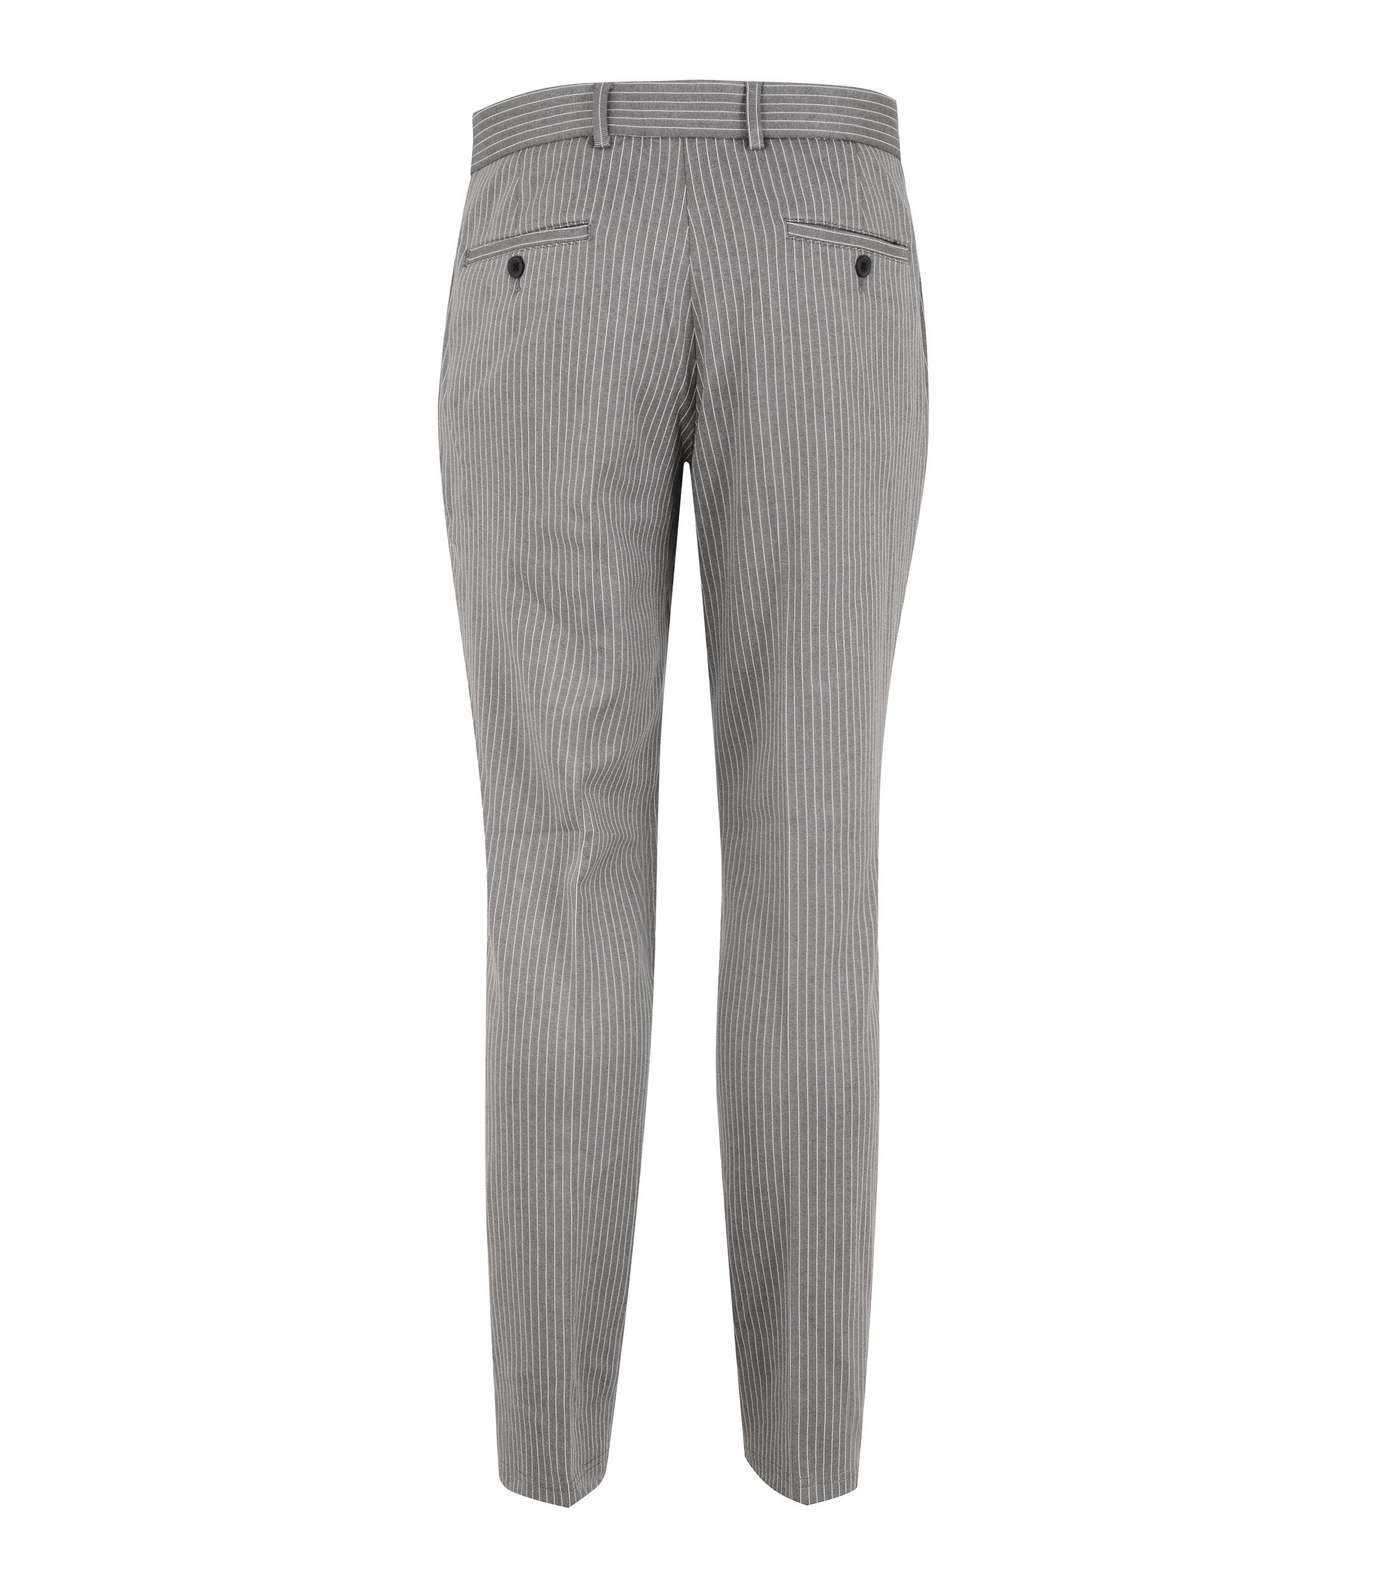 Jack & Jones Grey Marl Pinstripe Trousers Image 2